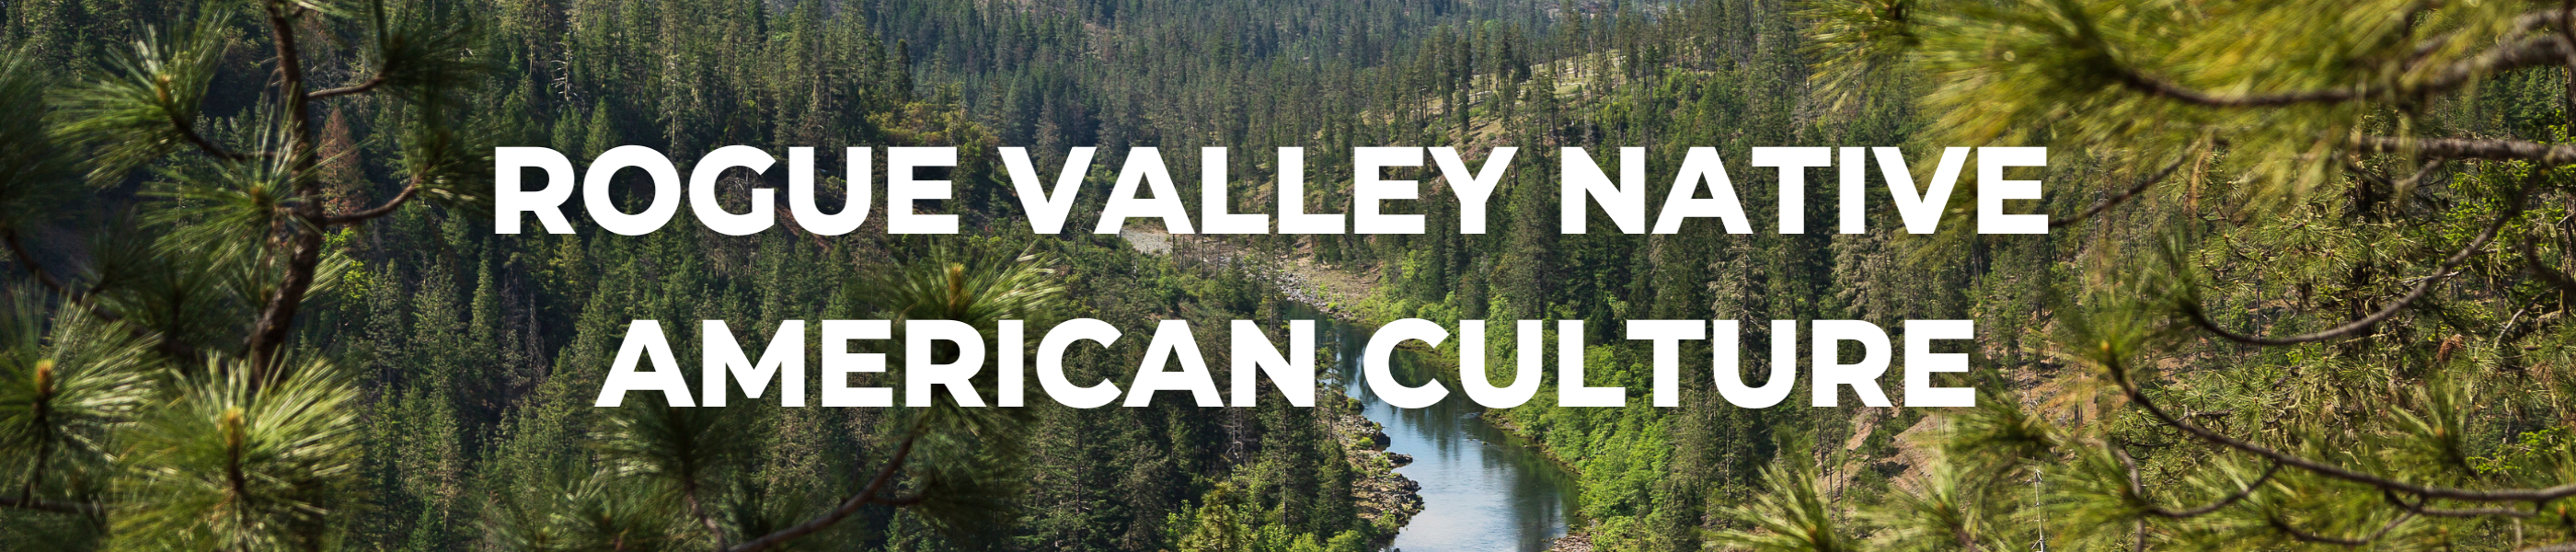 Rogue Valley Native American Culture